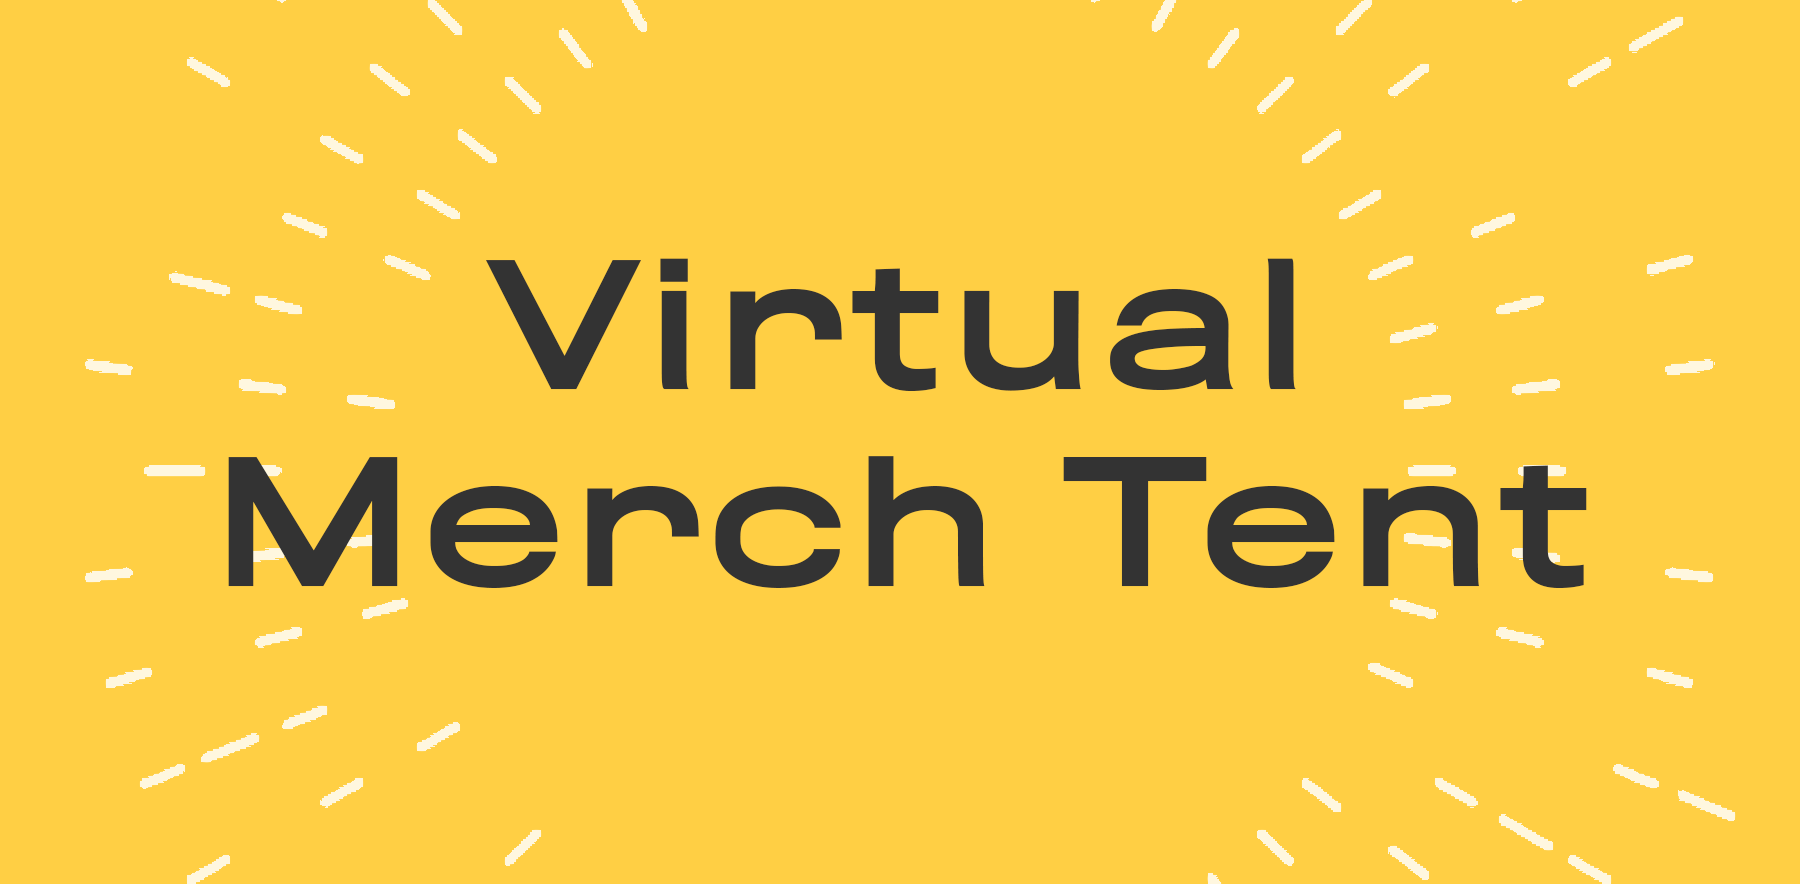 Virtual Merch Tent